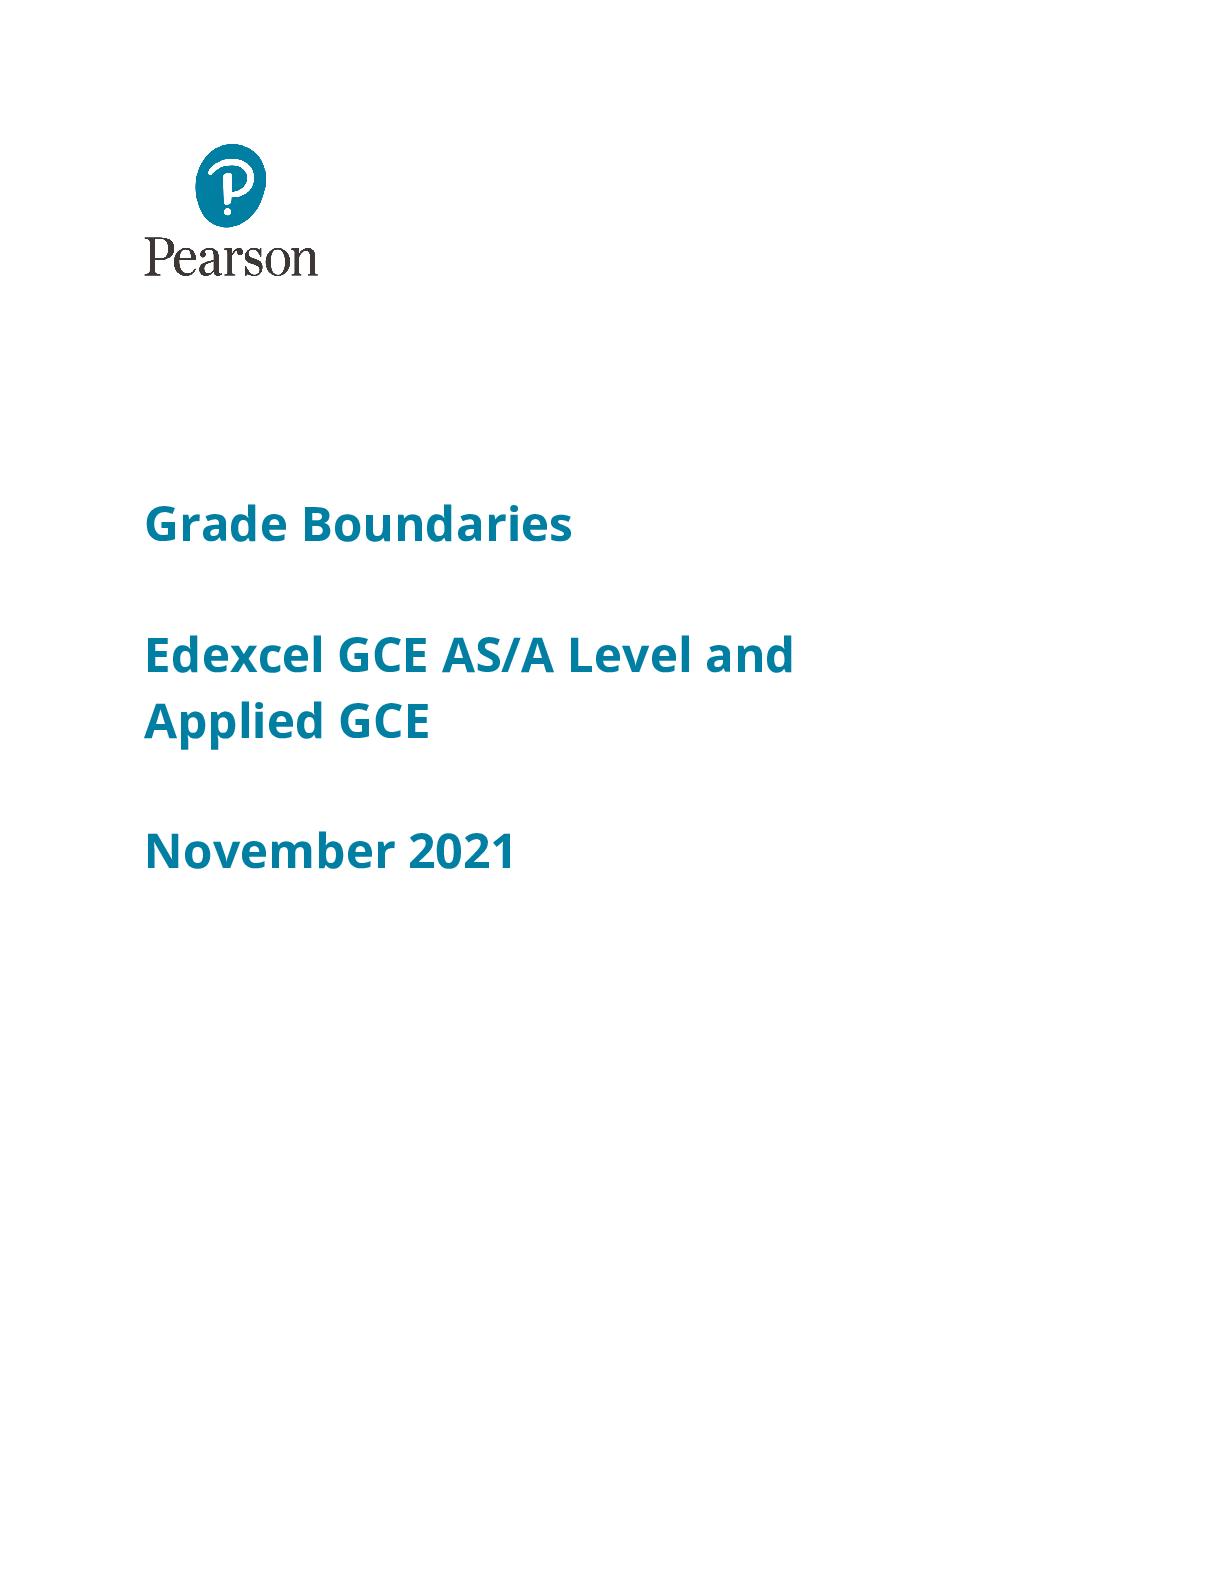 Pearson Edexcel Grade Boundaries Edexcel GCE AS/A Level and Applied GCE